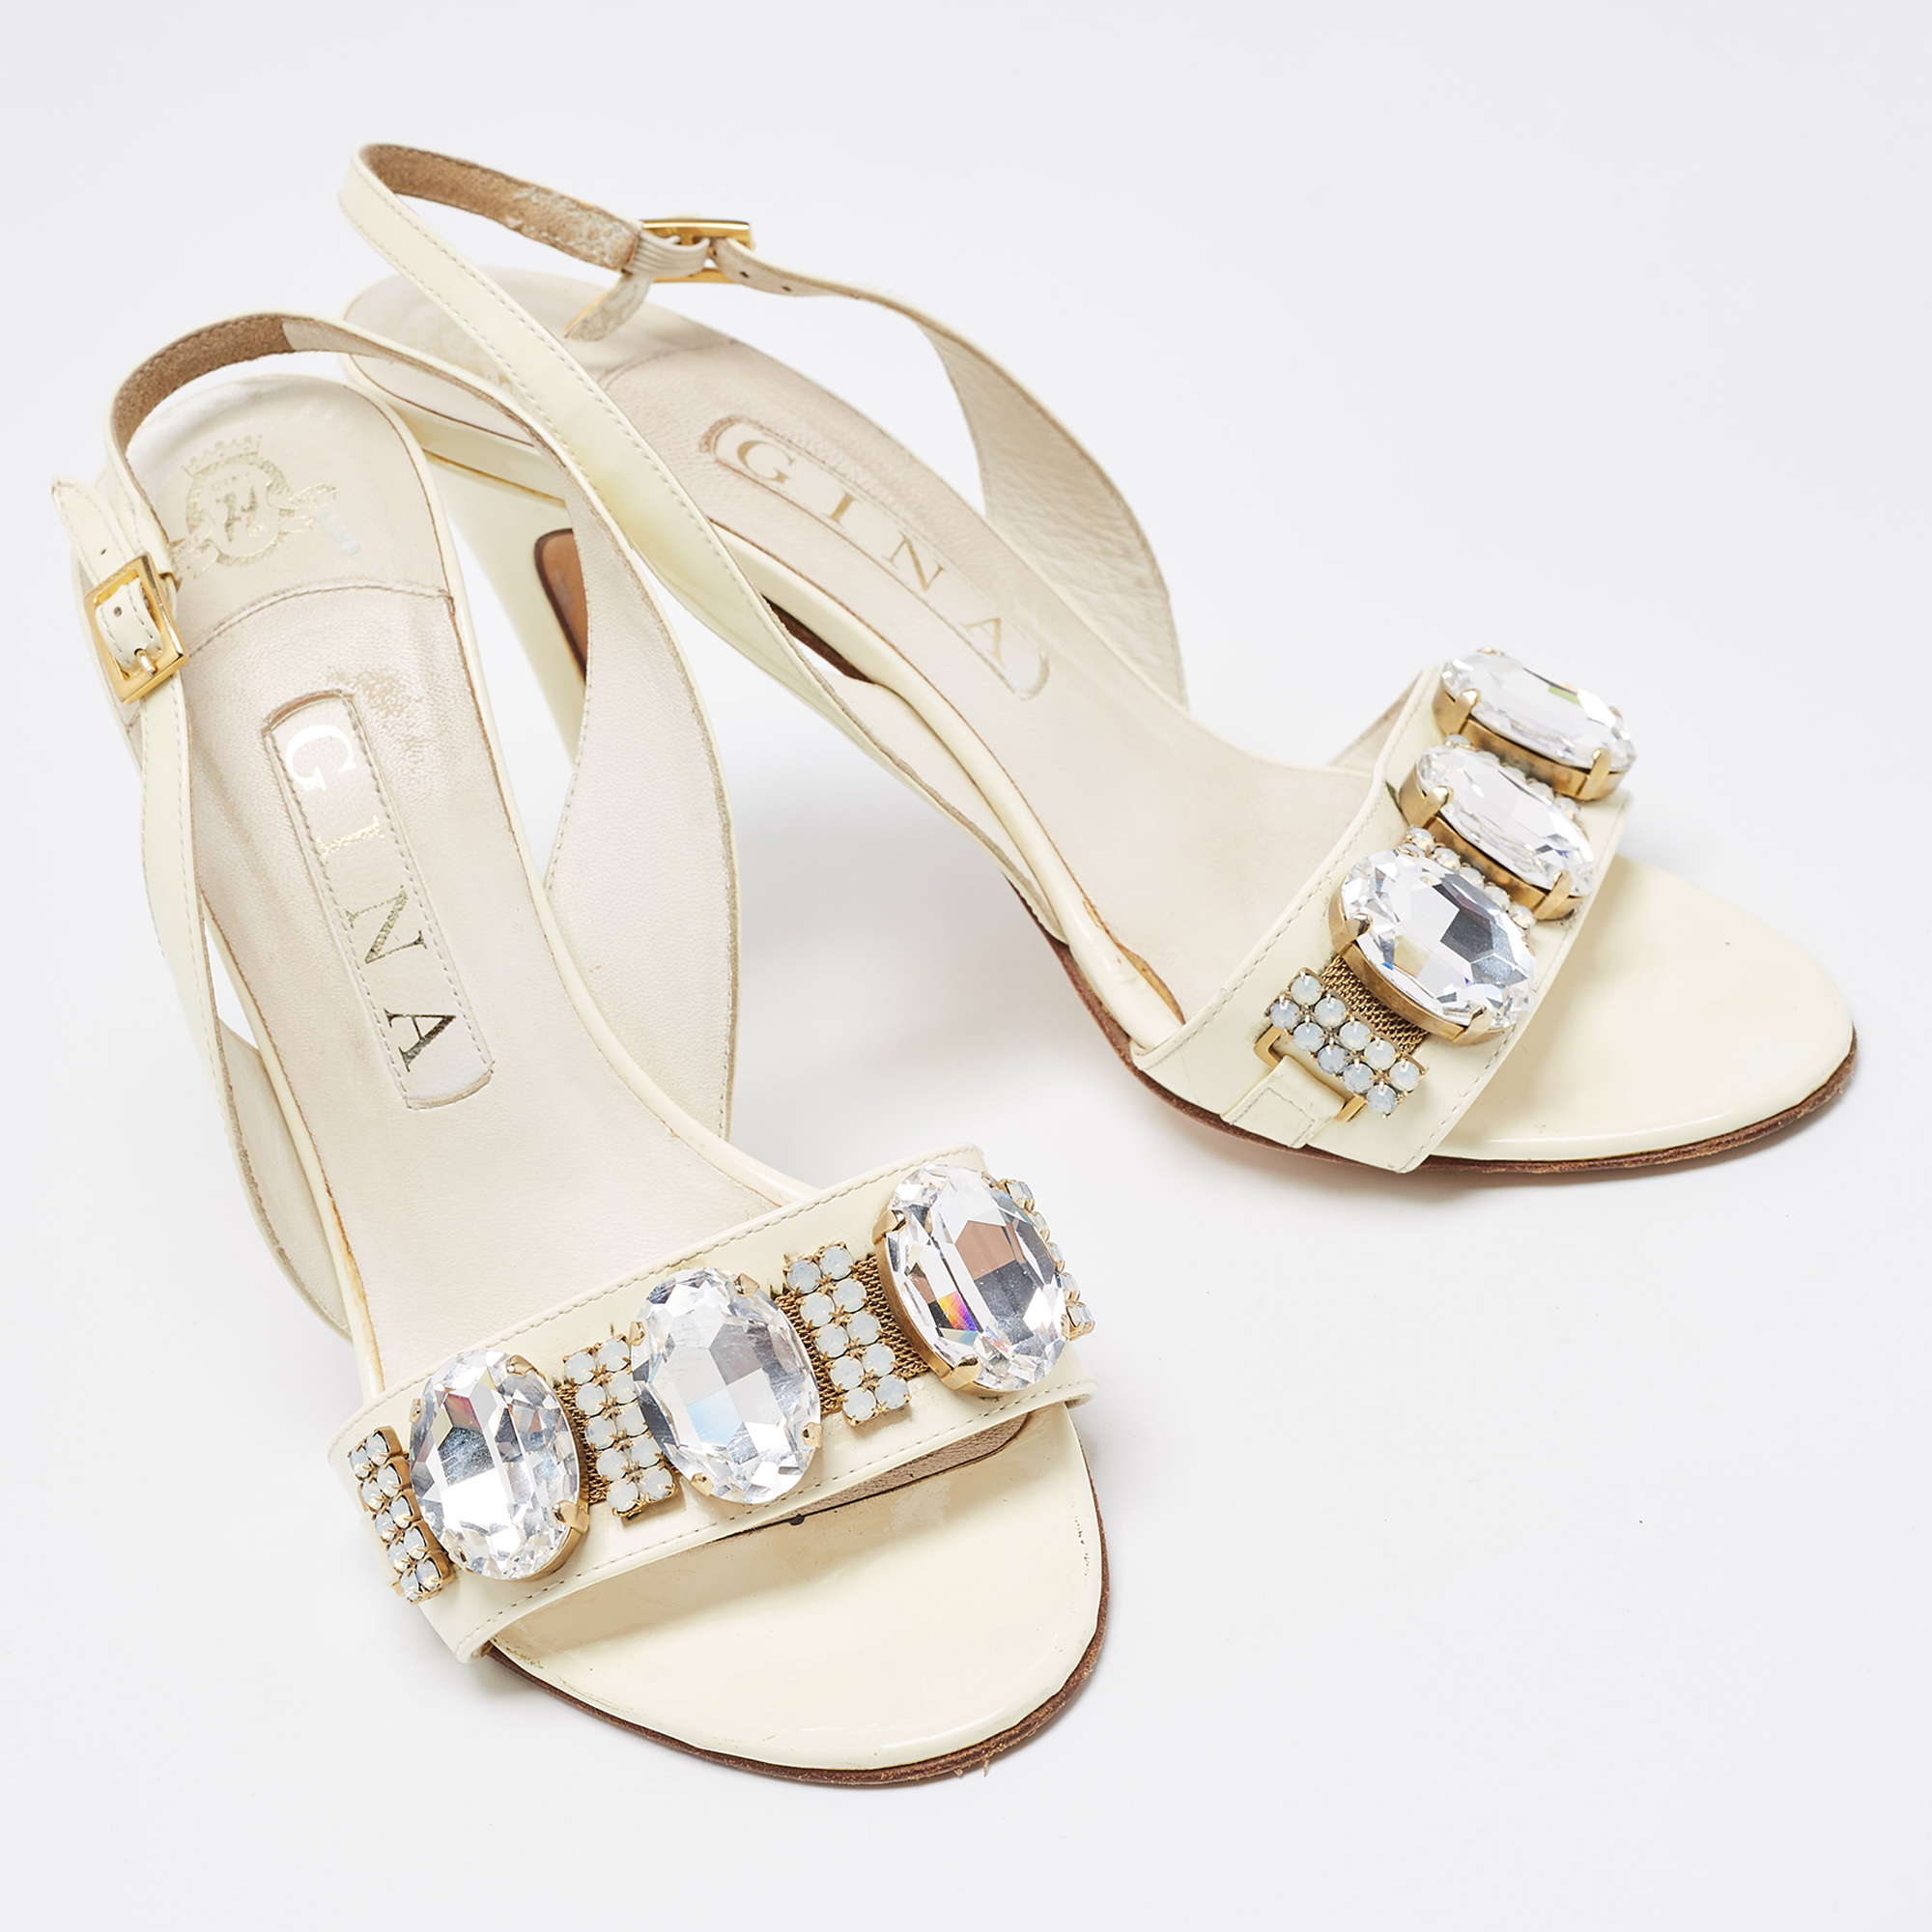 Gina Cream Patent Leather Crystal Embellished Slingback Sandals Size 38